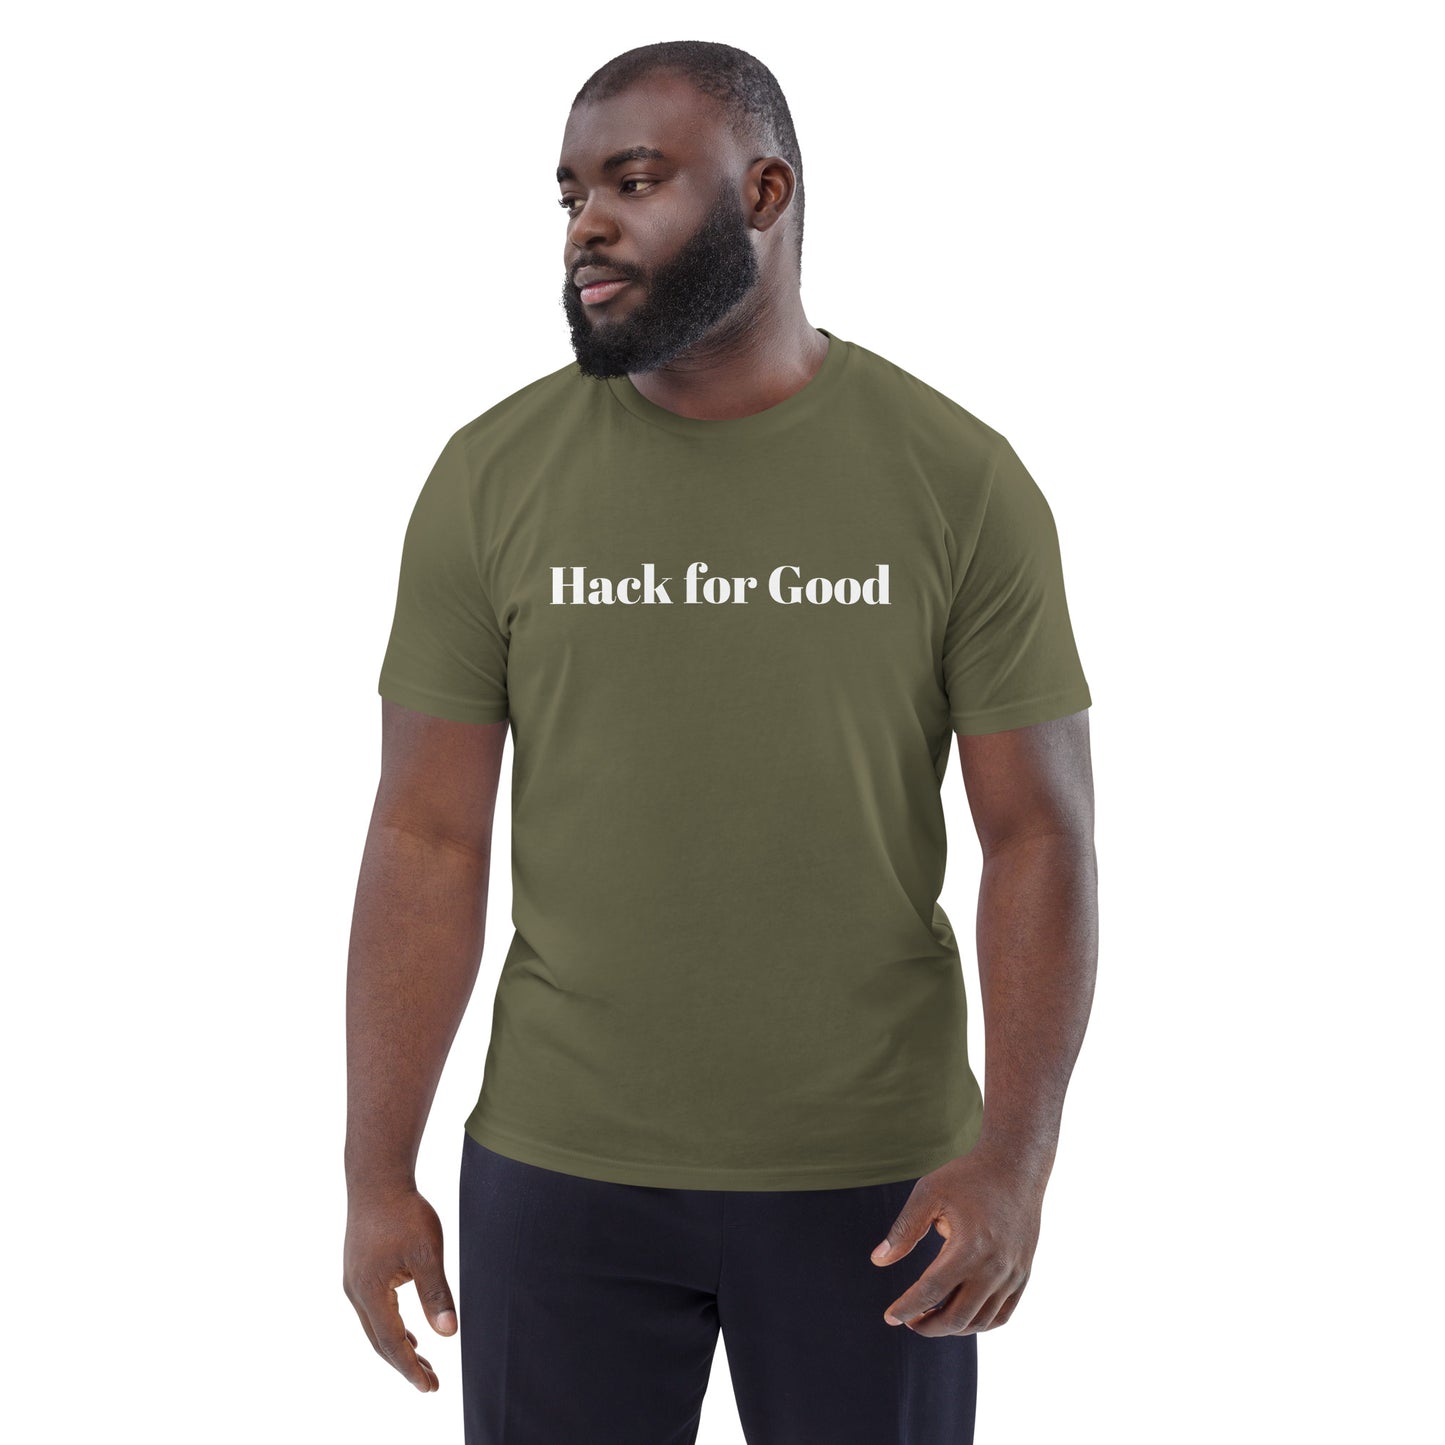 Hack for Good Camiseta unisex de algodón orgánico